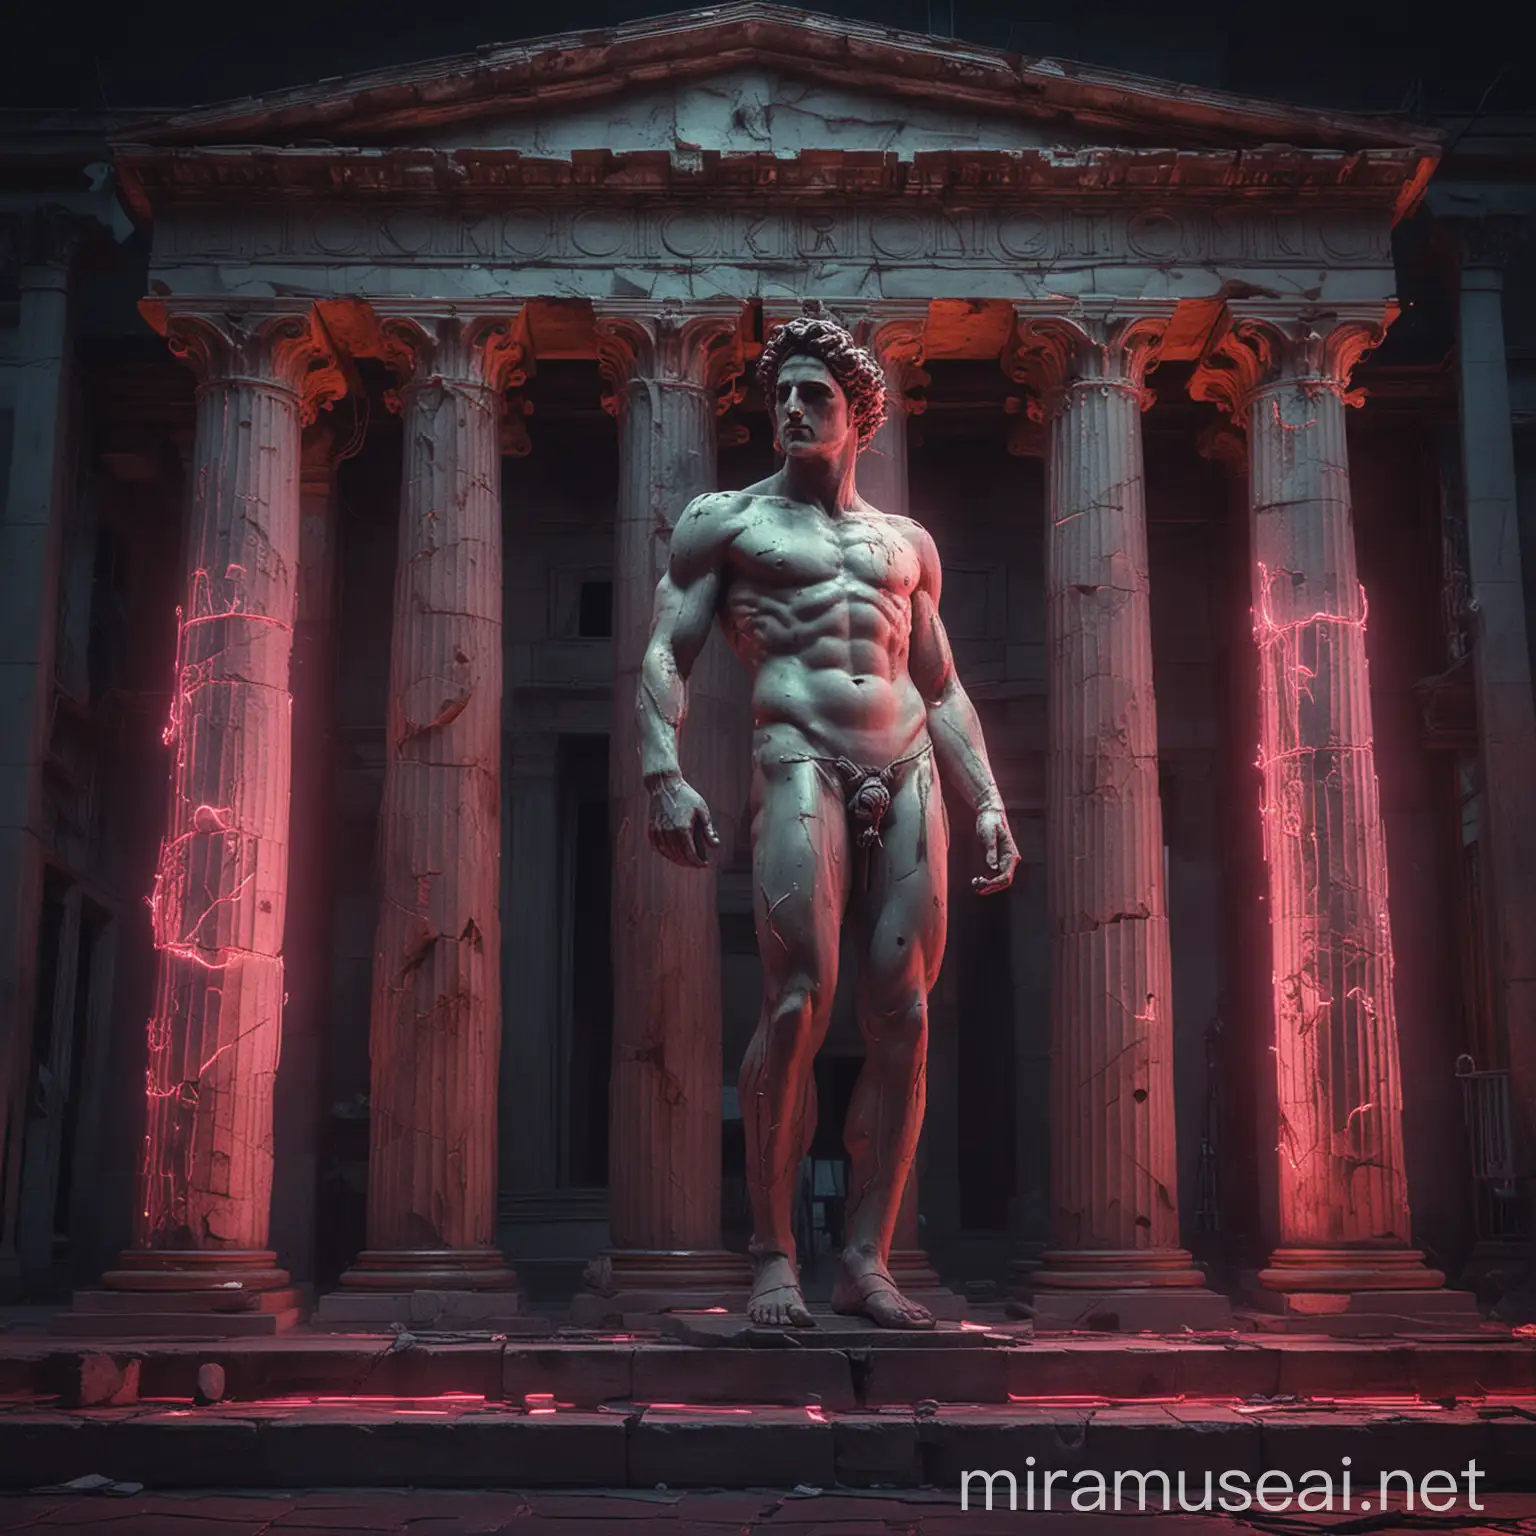 Sculpture of Greek God Amid NeonLit Roman Columns